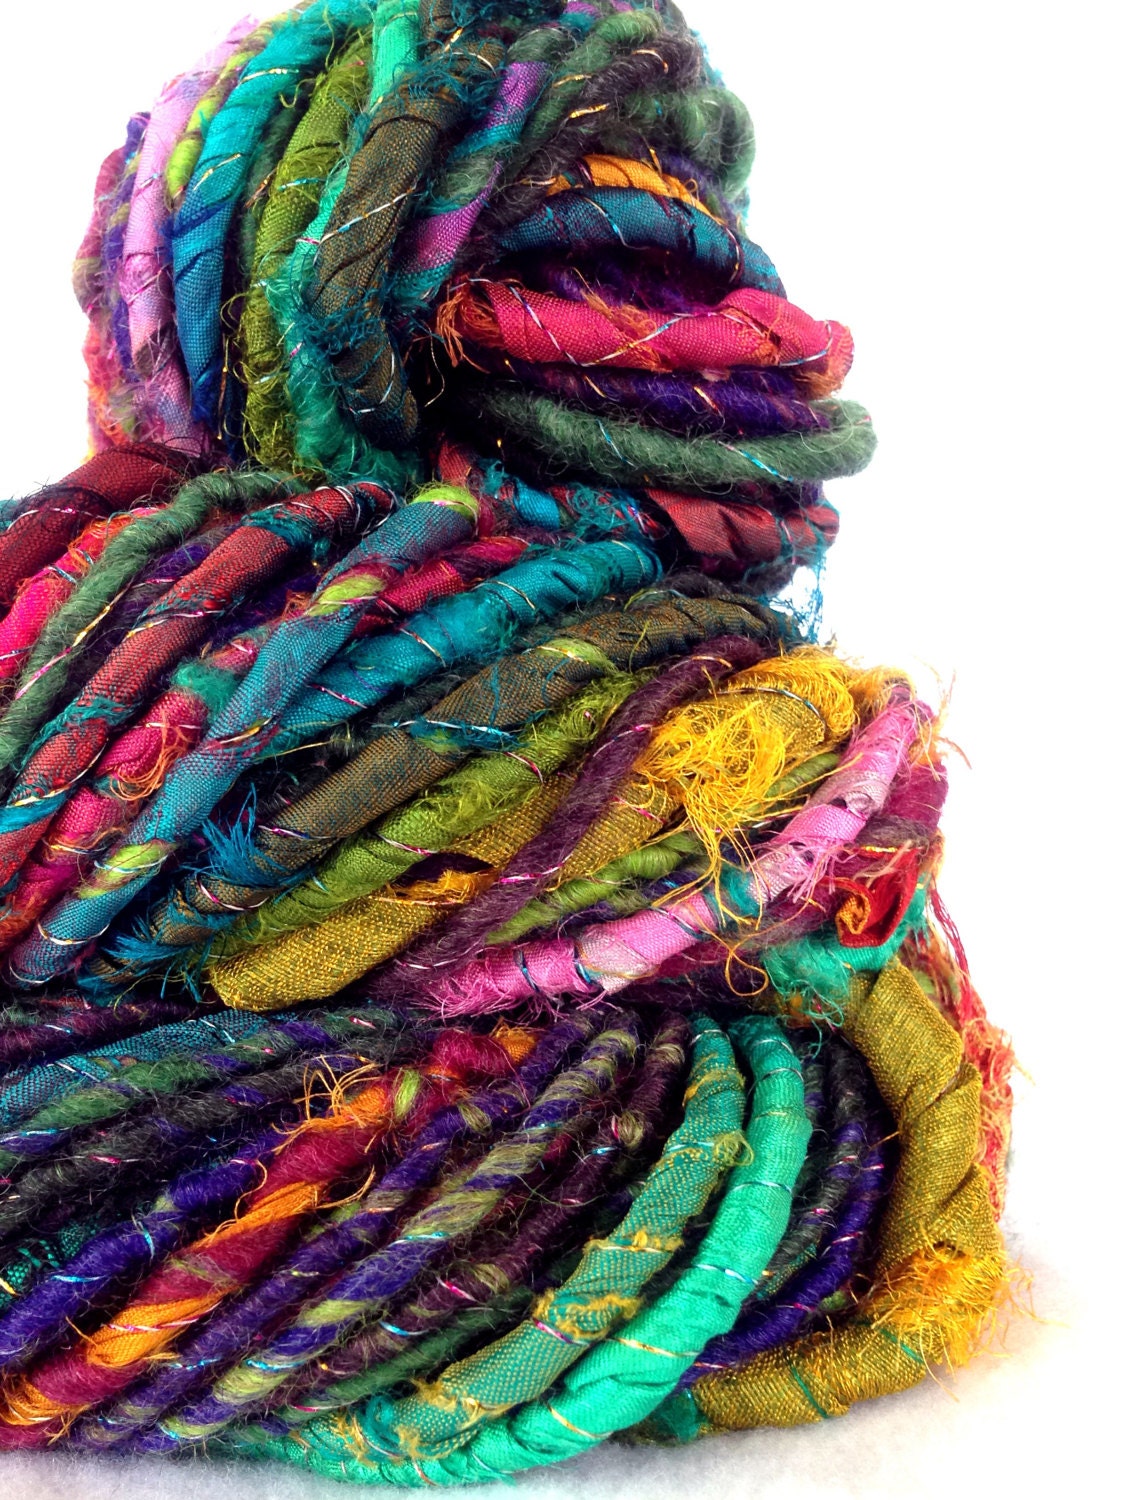 Hand Spun Art Yarn. Knitting Crochet Weaving Wool